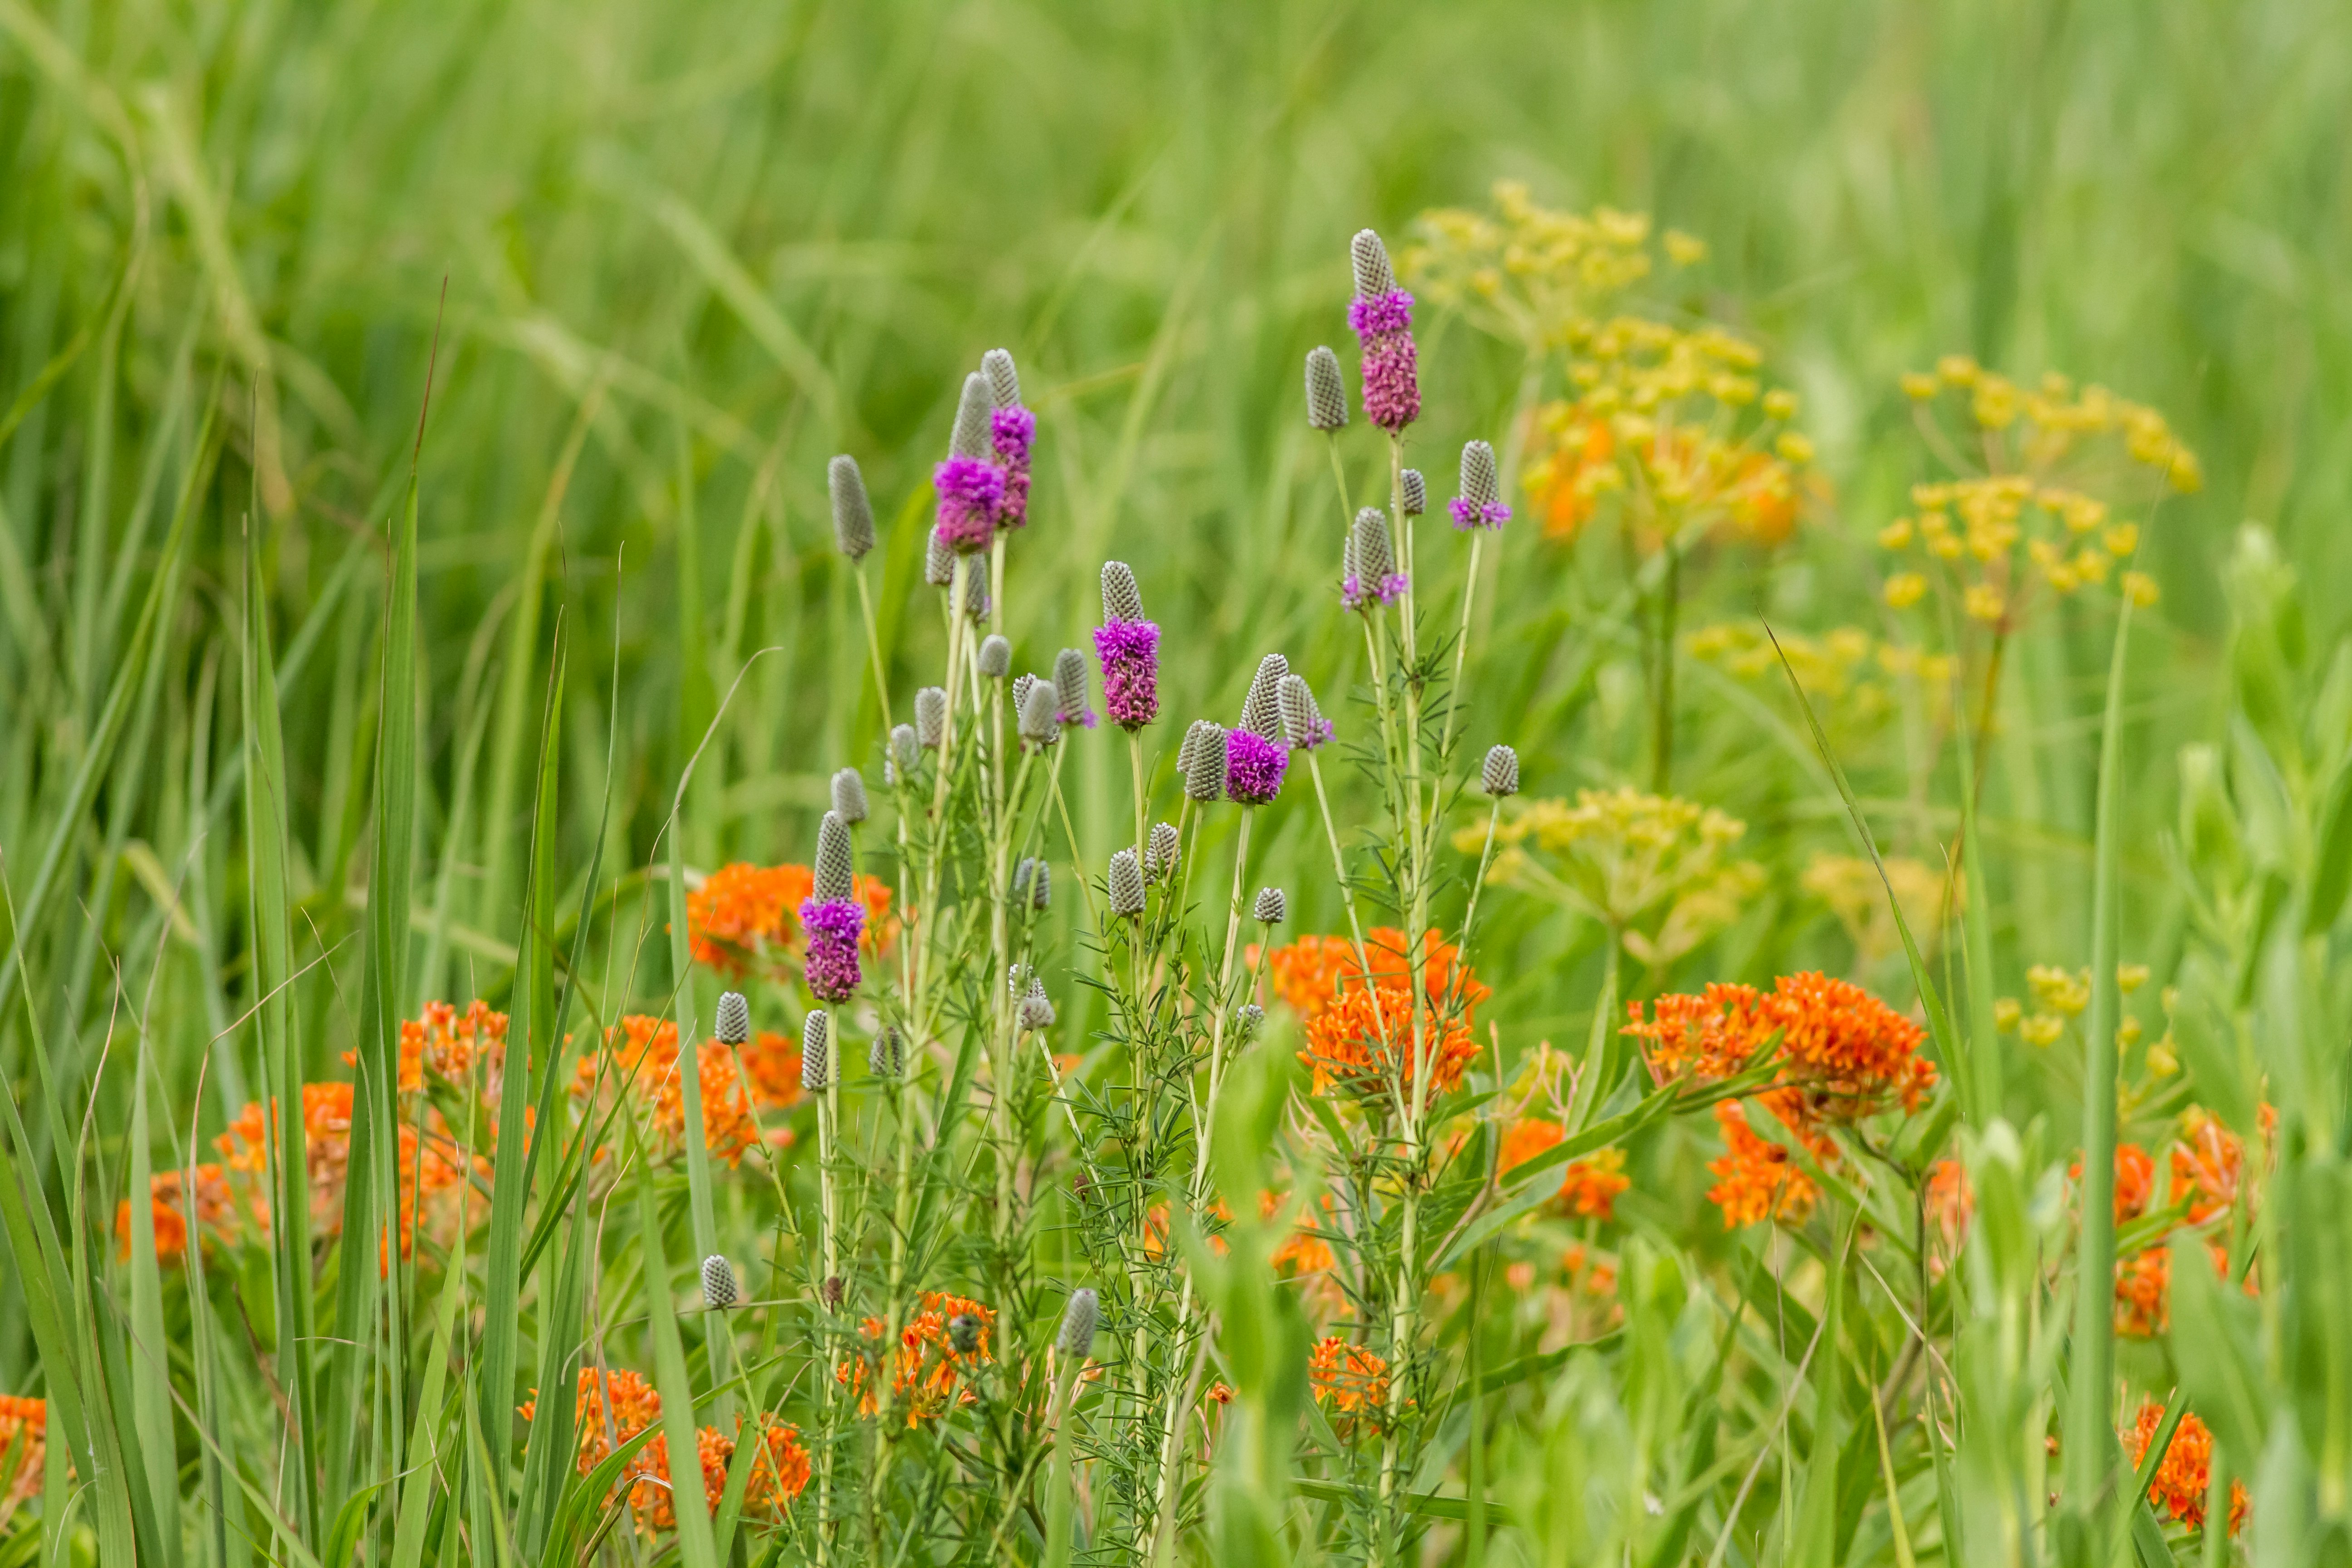 purple and orange flowers in green grass field